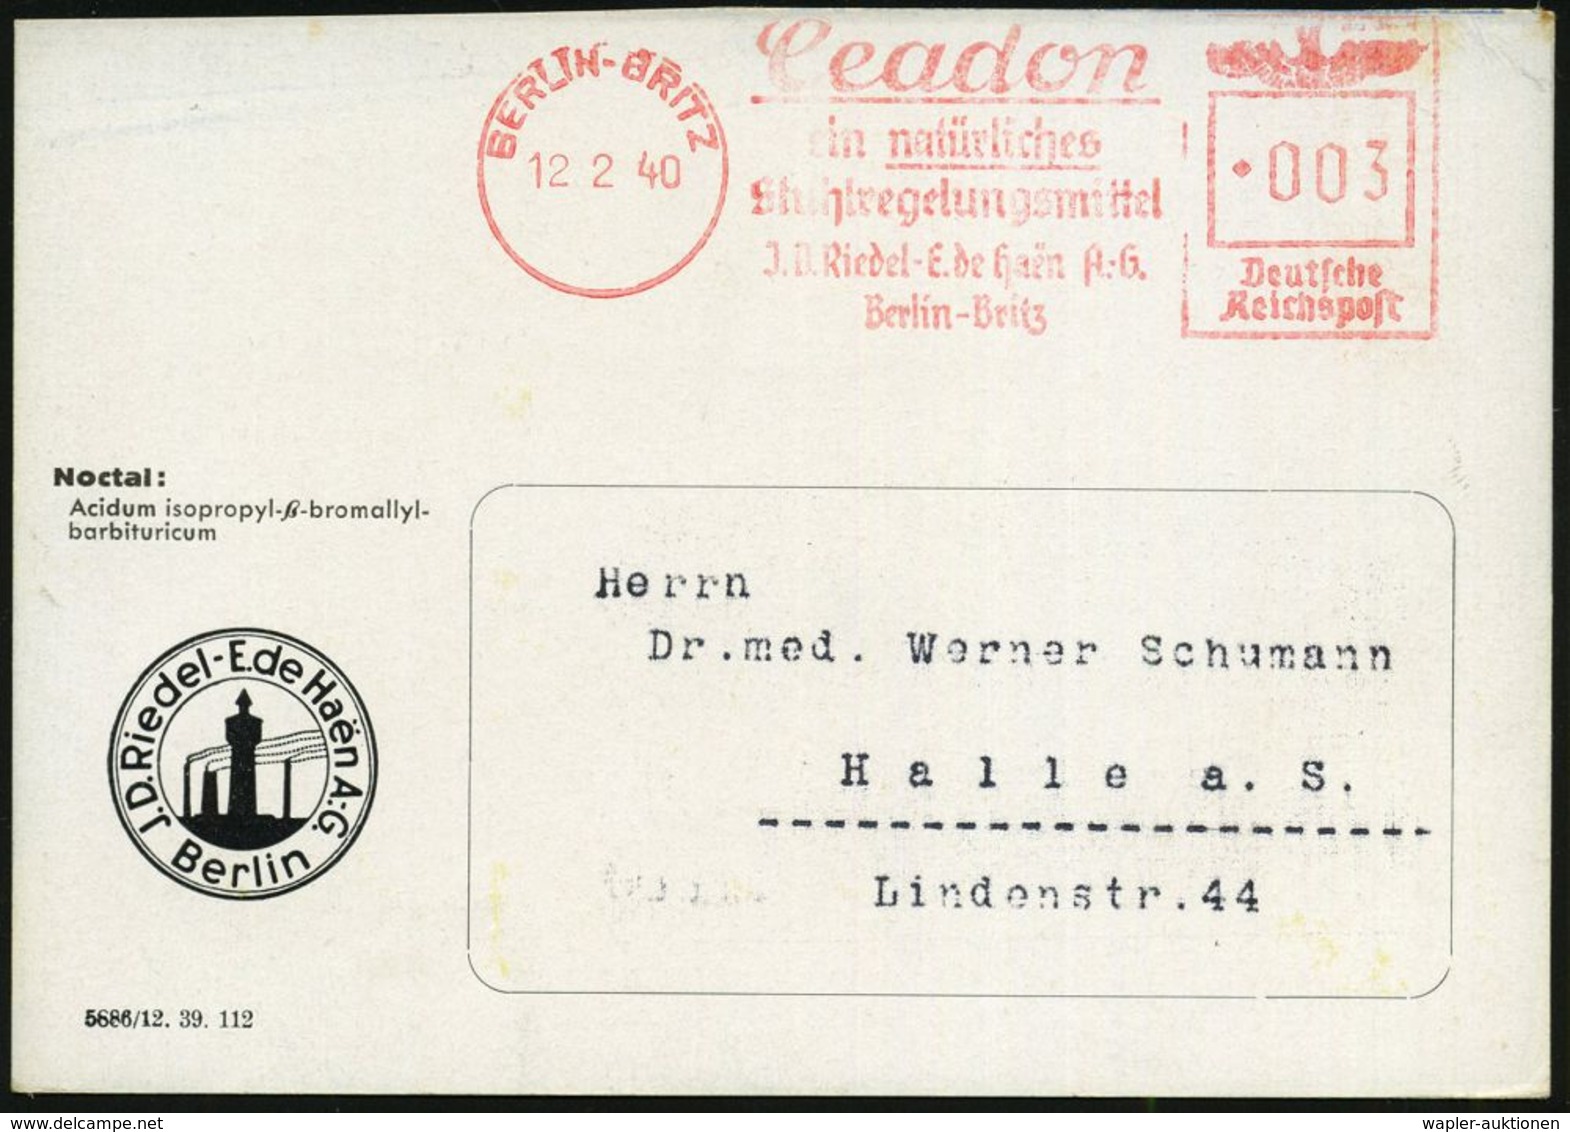 BERLIN-BRITZ #bzw.# BERLIN-BRITZ 1/ Ceadon/ Ein Natürliches/ Stuhlregelungsmittel/ J.D.Riedel-E.de Haen AG 1940 (Feb./Mr - Medizin